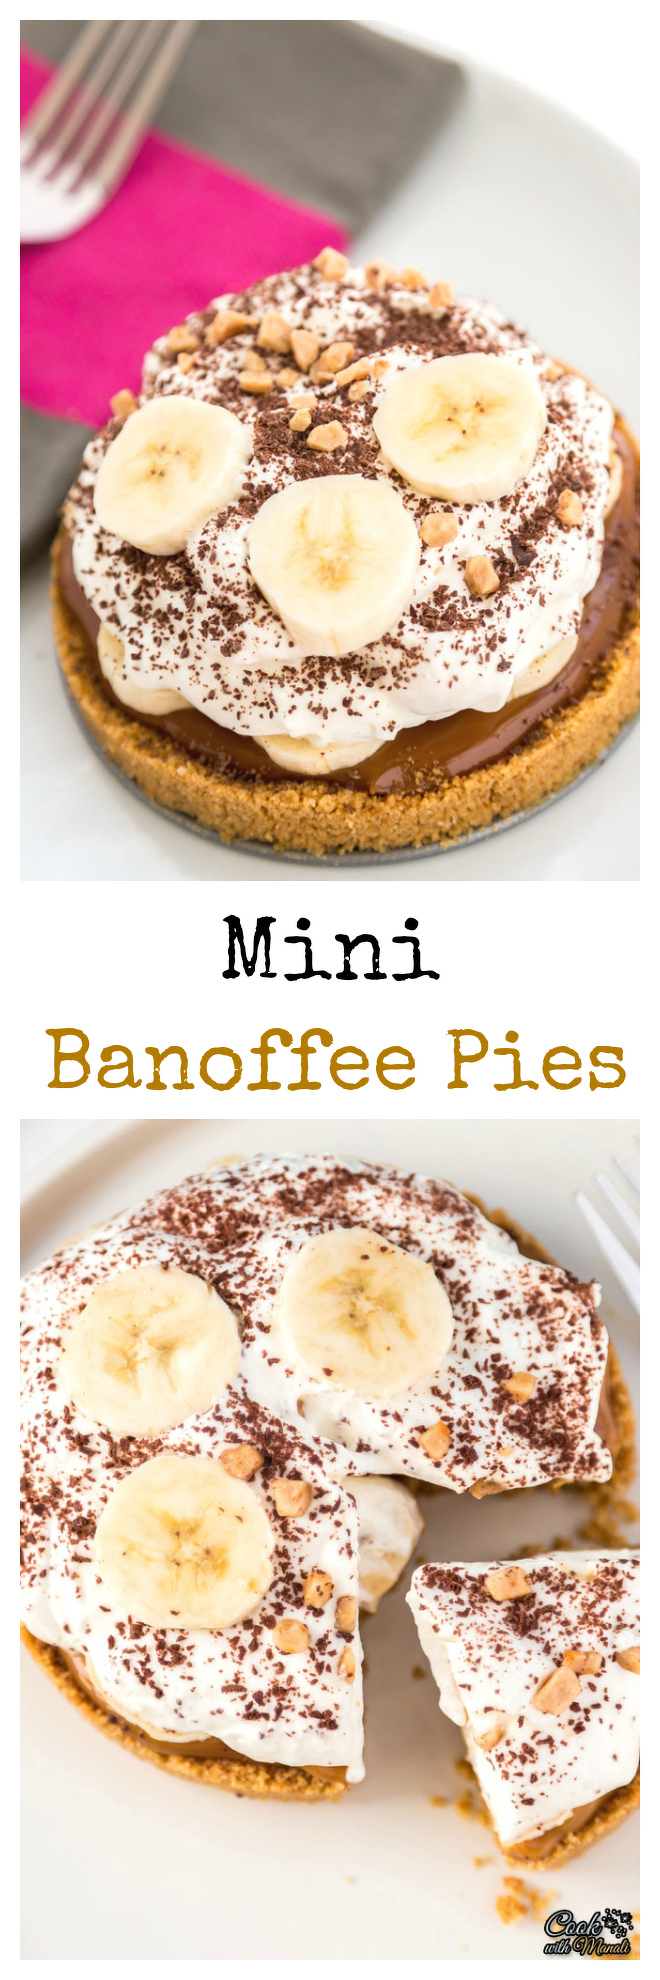 Mini Banoffee Pies Collage-nocwm